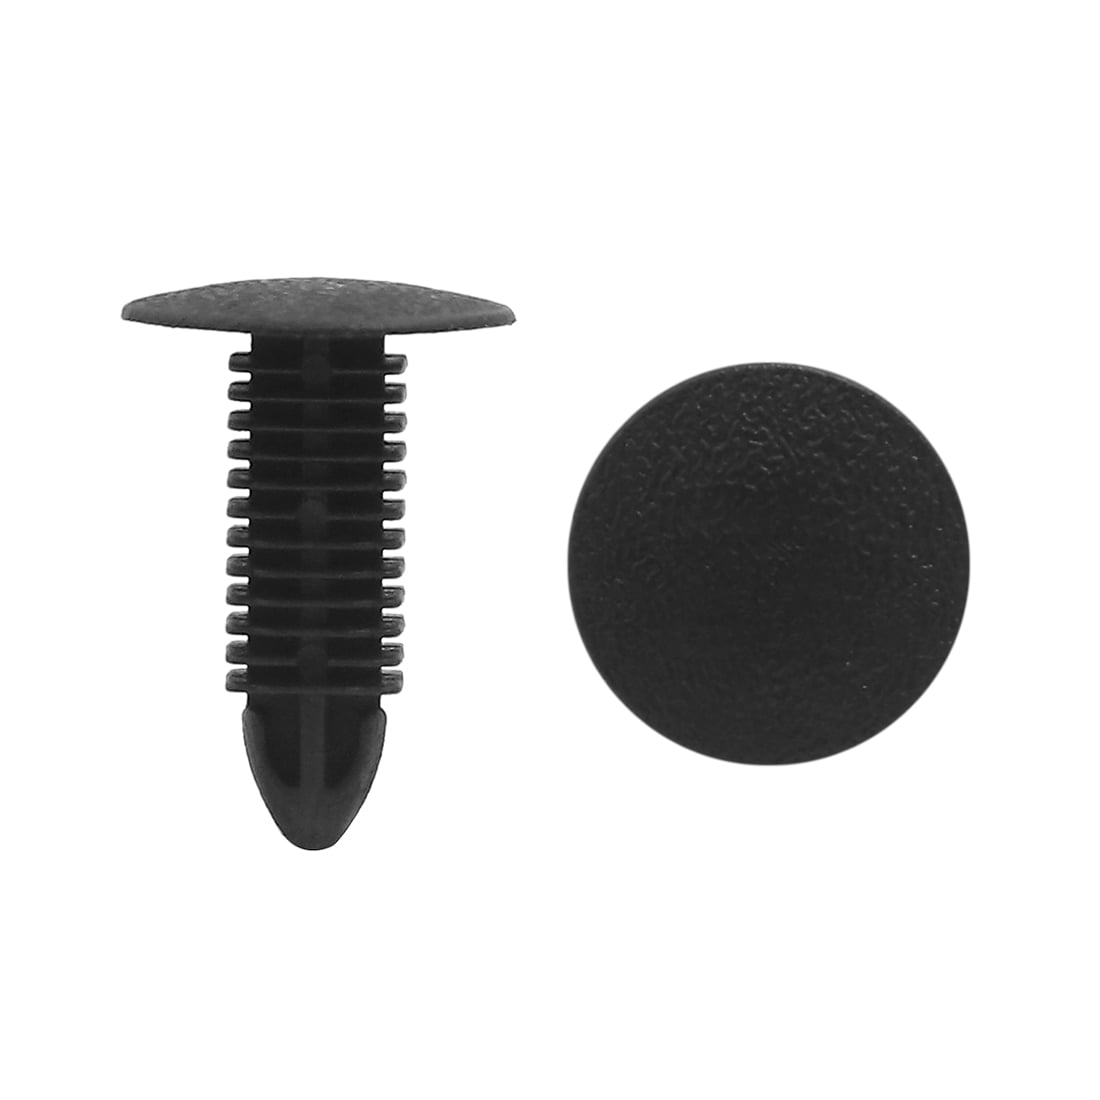 uxcell 50pcs Plastic Rivets Fastener Bumper Push Screw Pin Clips 8 x 8mm Hole Black